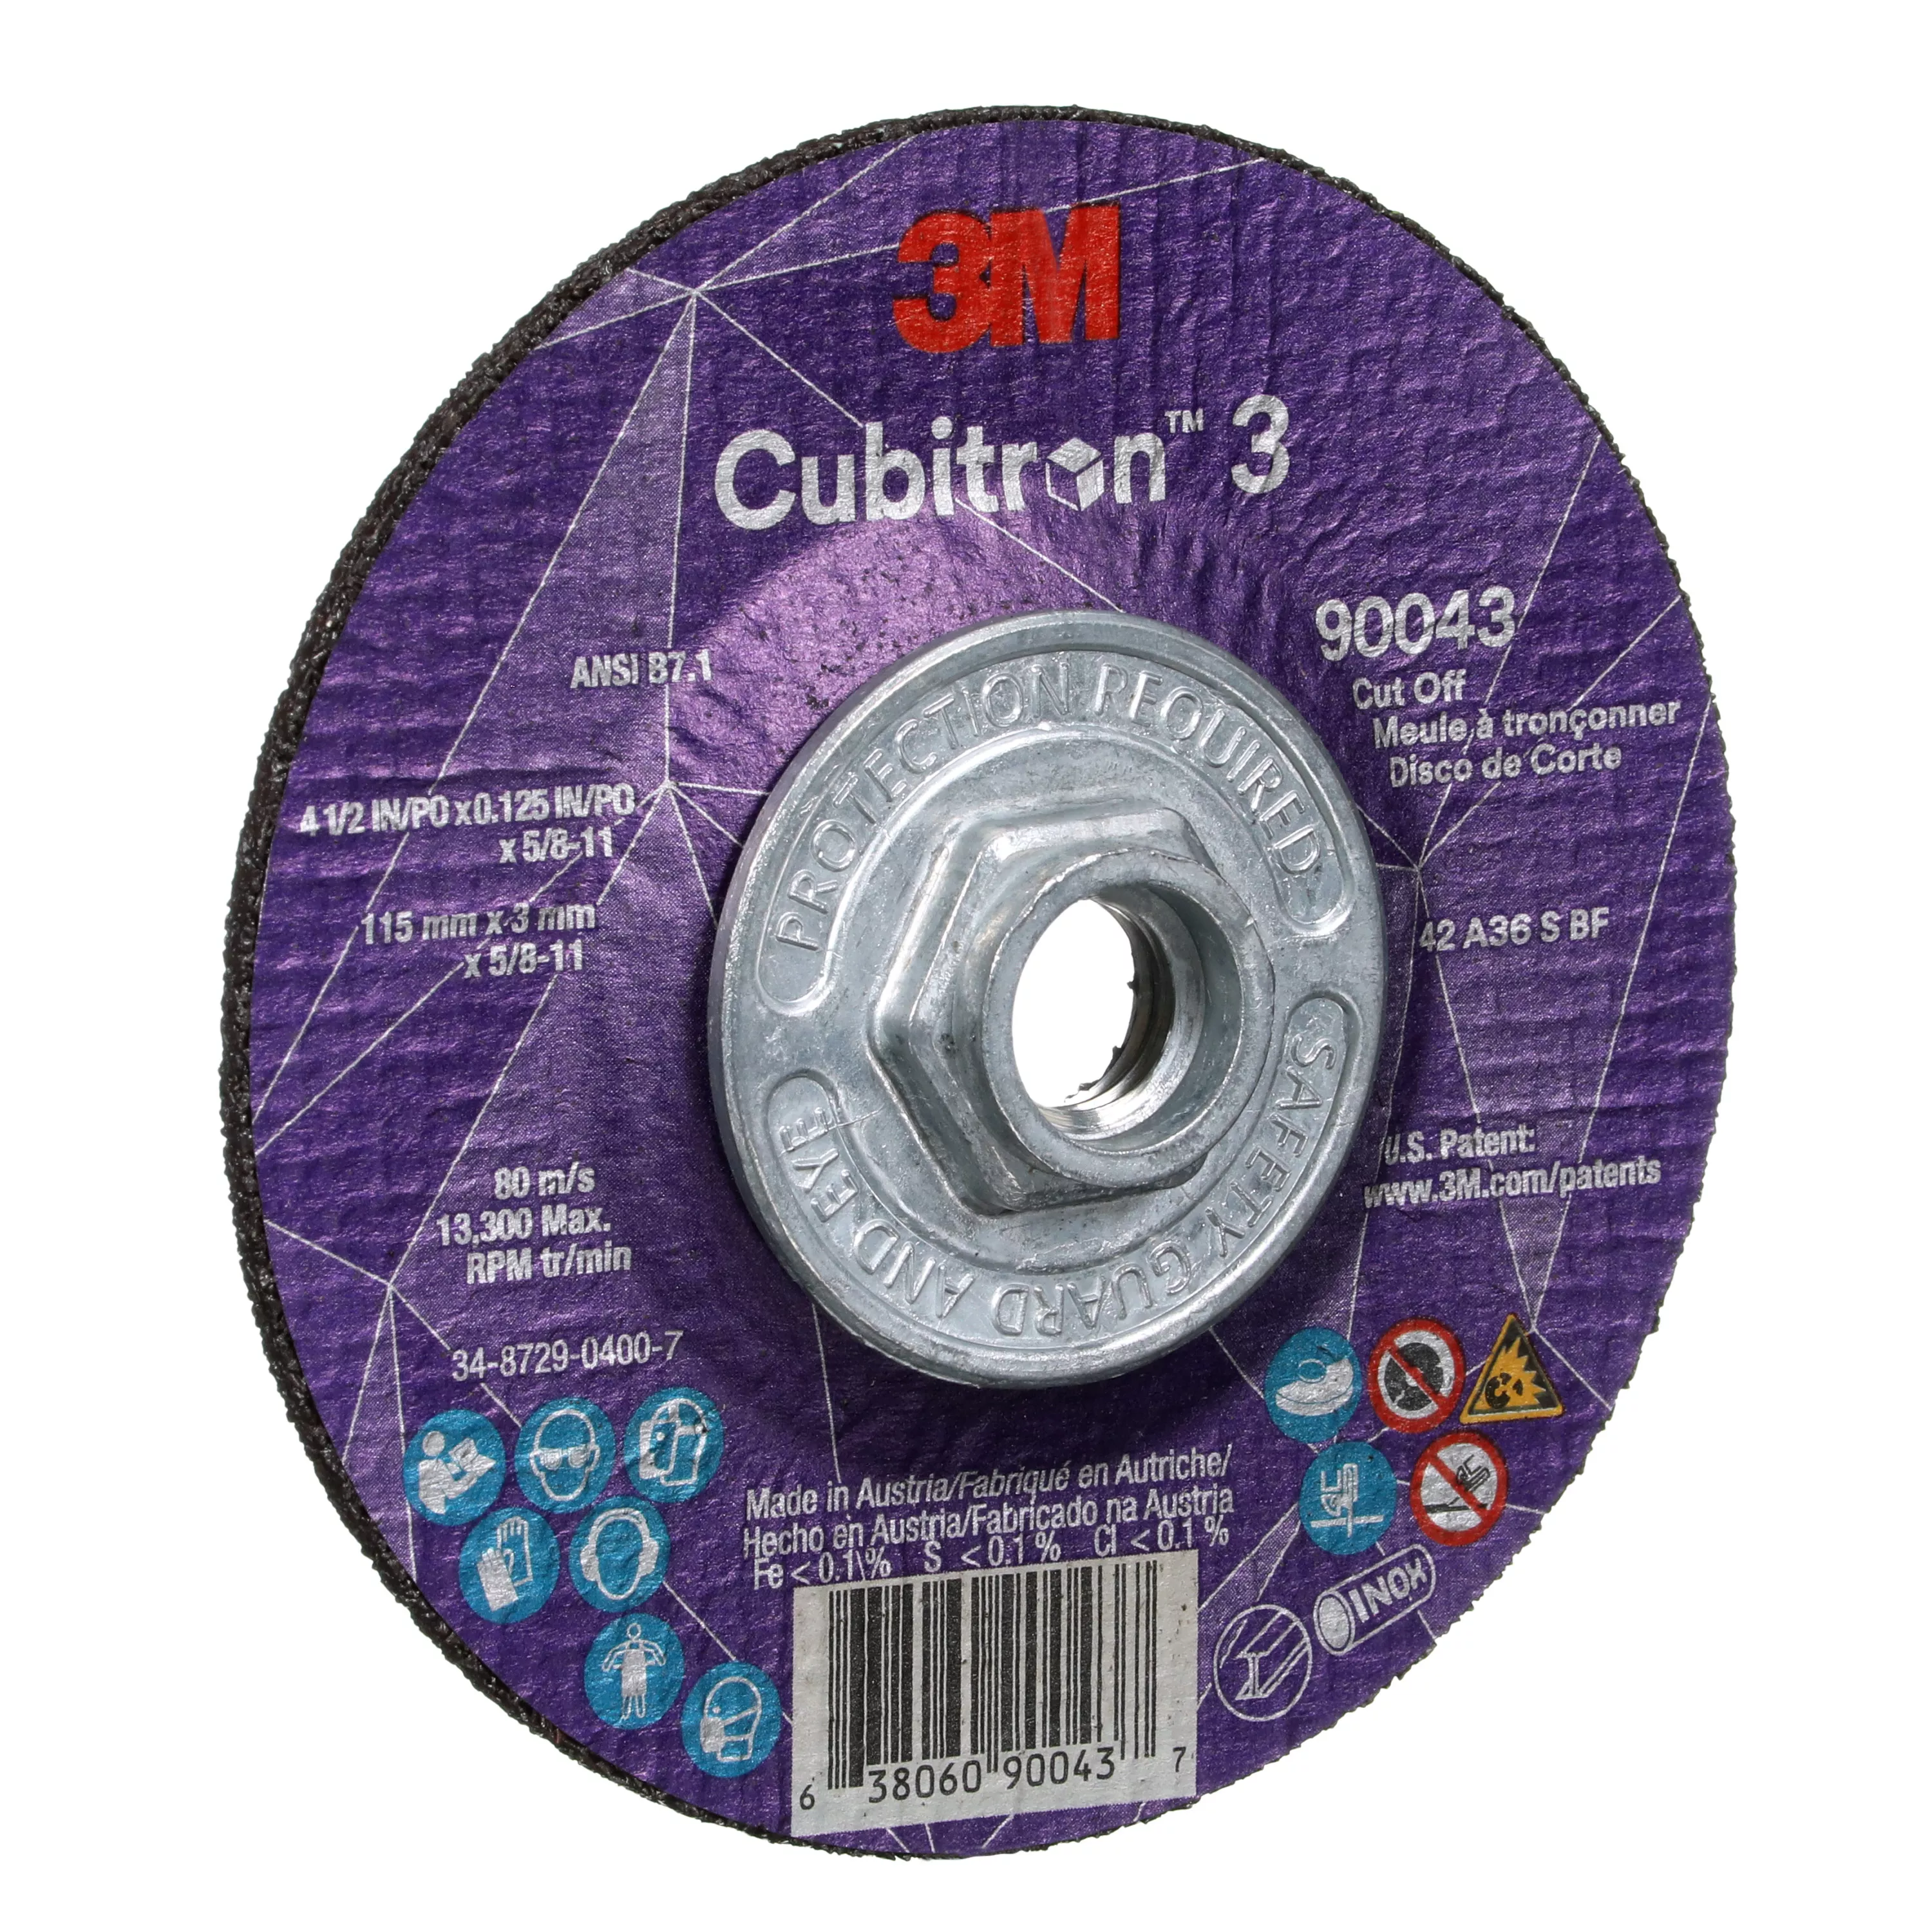 SKU 7100313187 | 3M™ Cubitron™ 3 Cut-Off Wheel